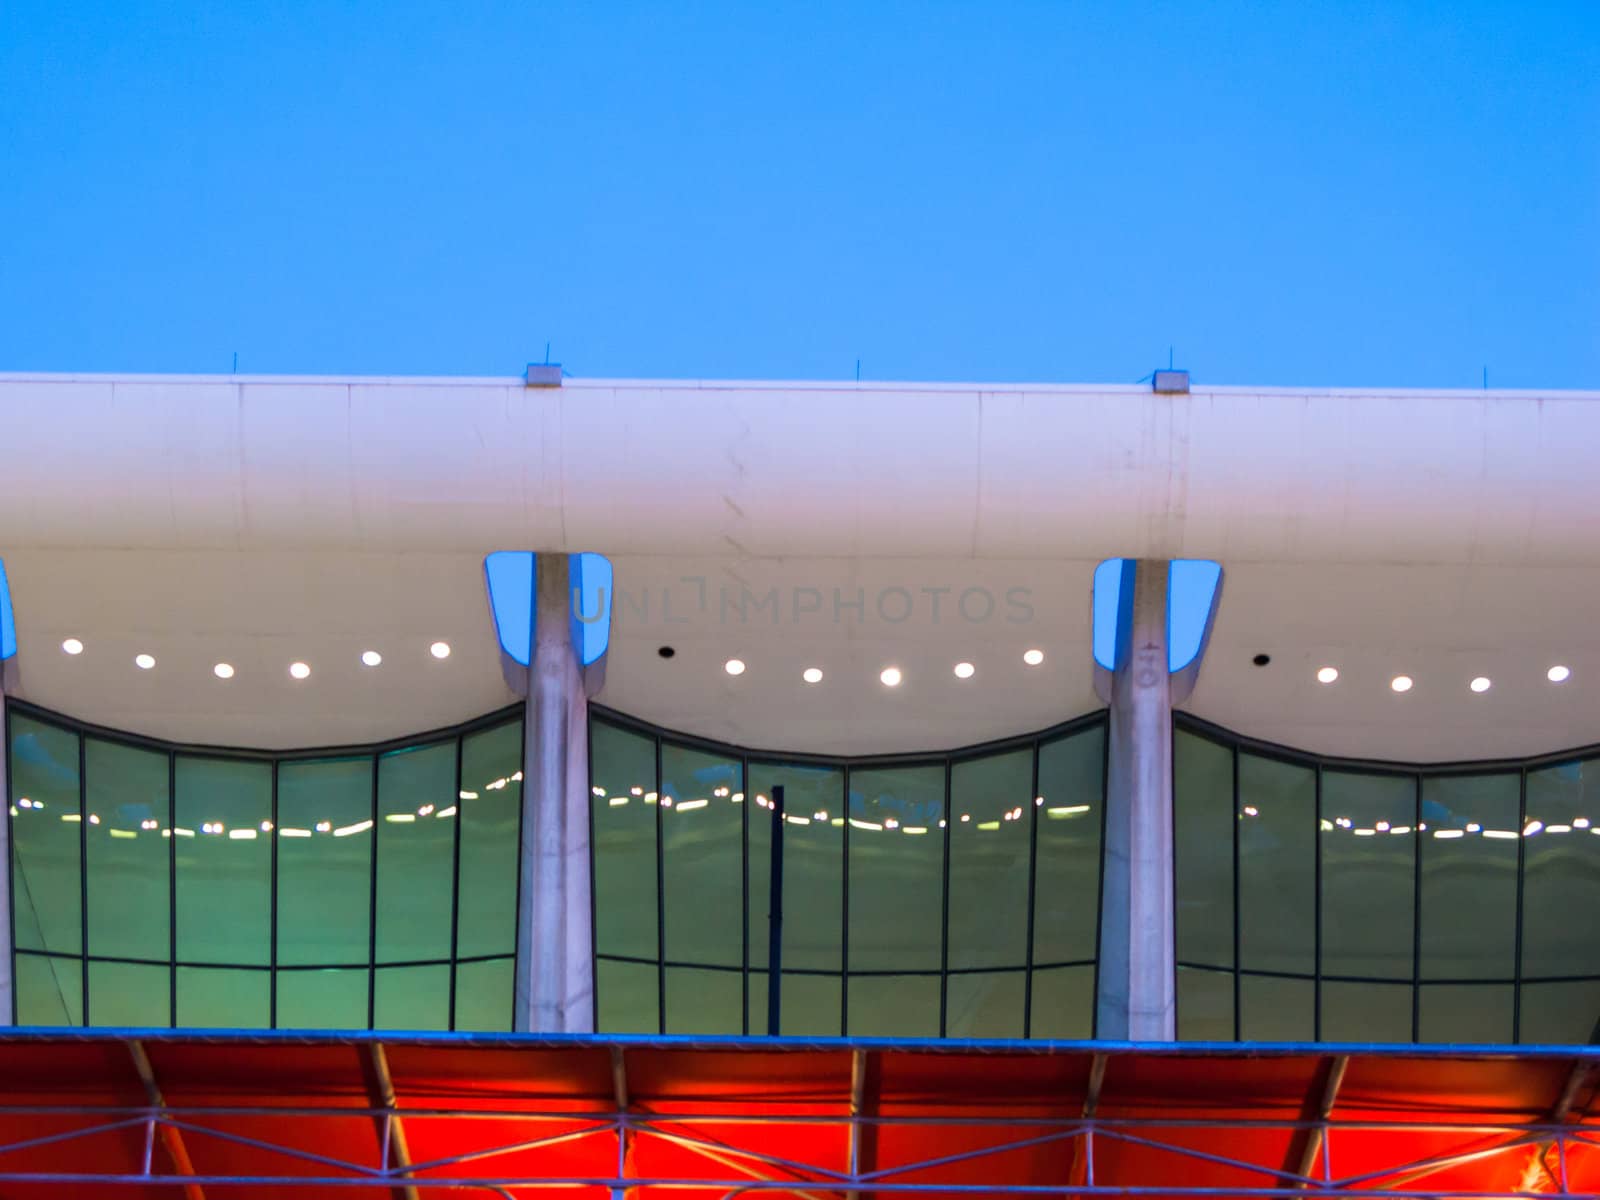 Dulles International Aiport terminal by edan